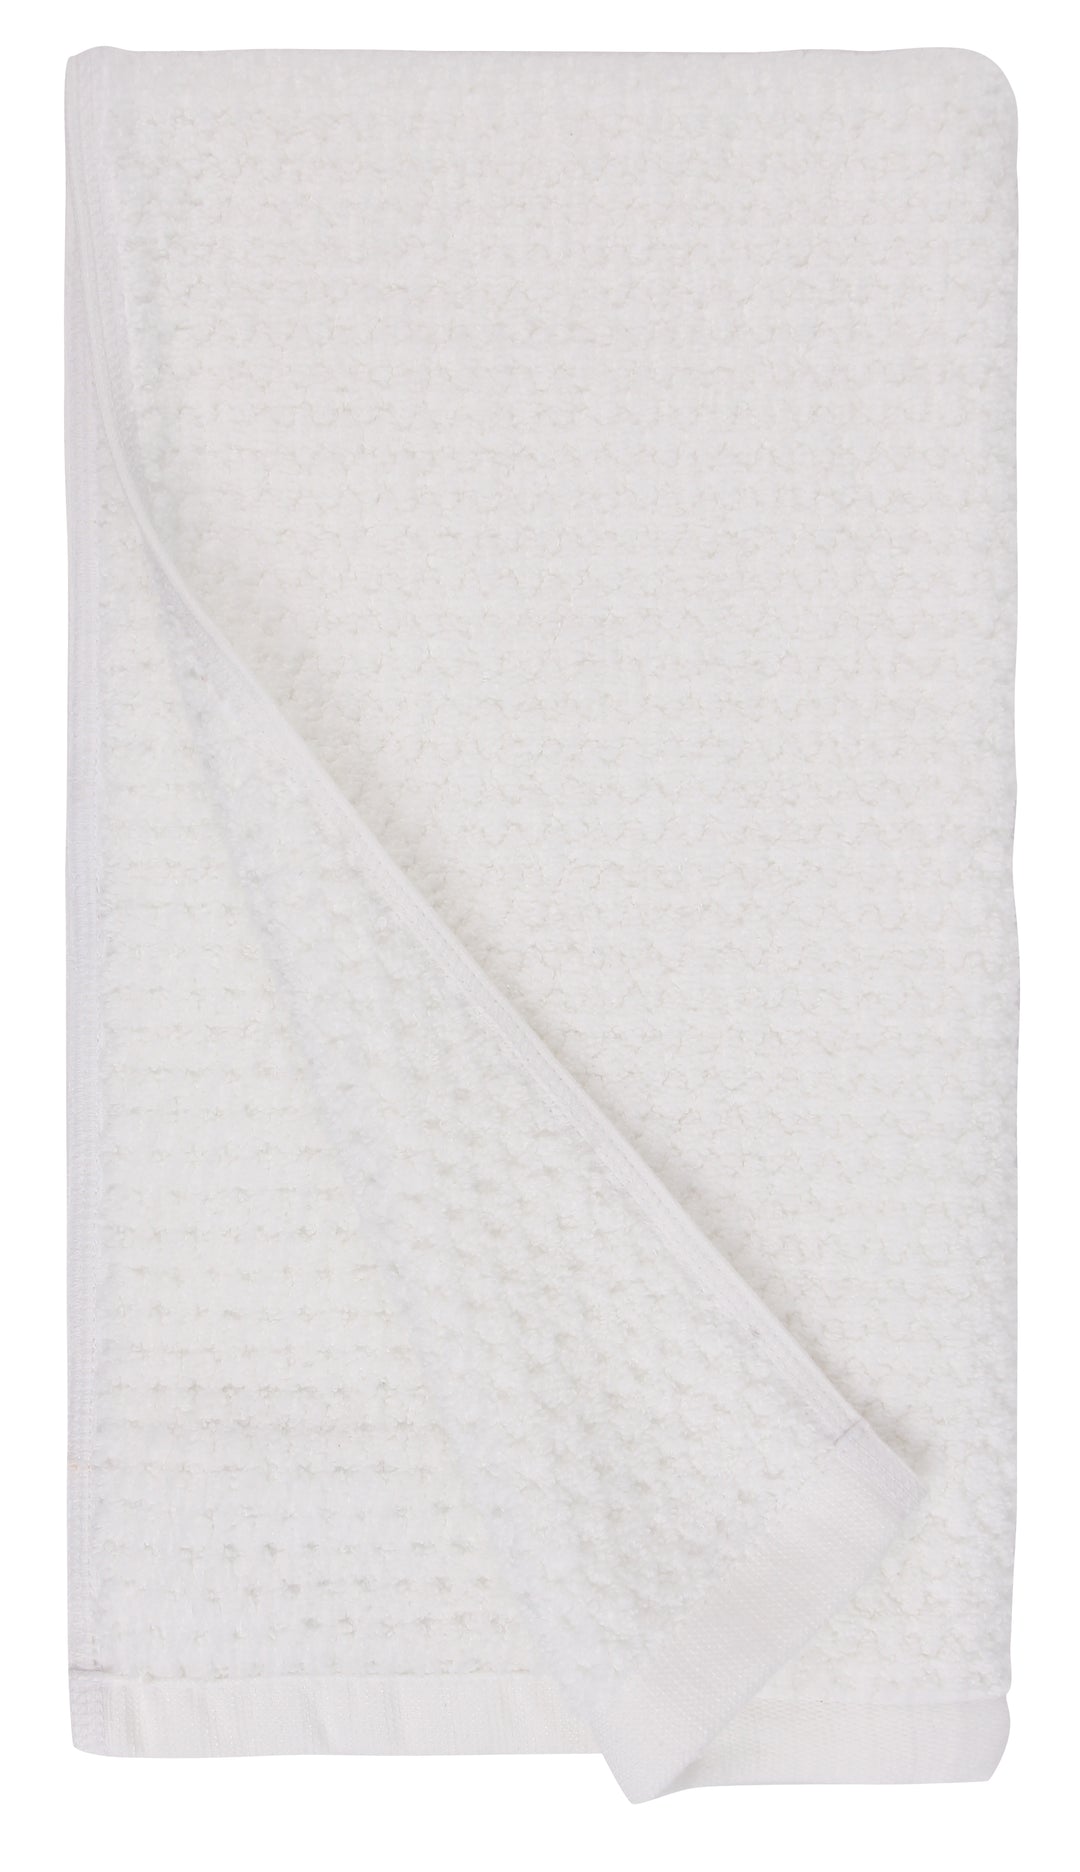 Diamond Jacquard Towels, Bath Towel Set - 10 Piece, White